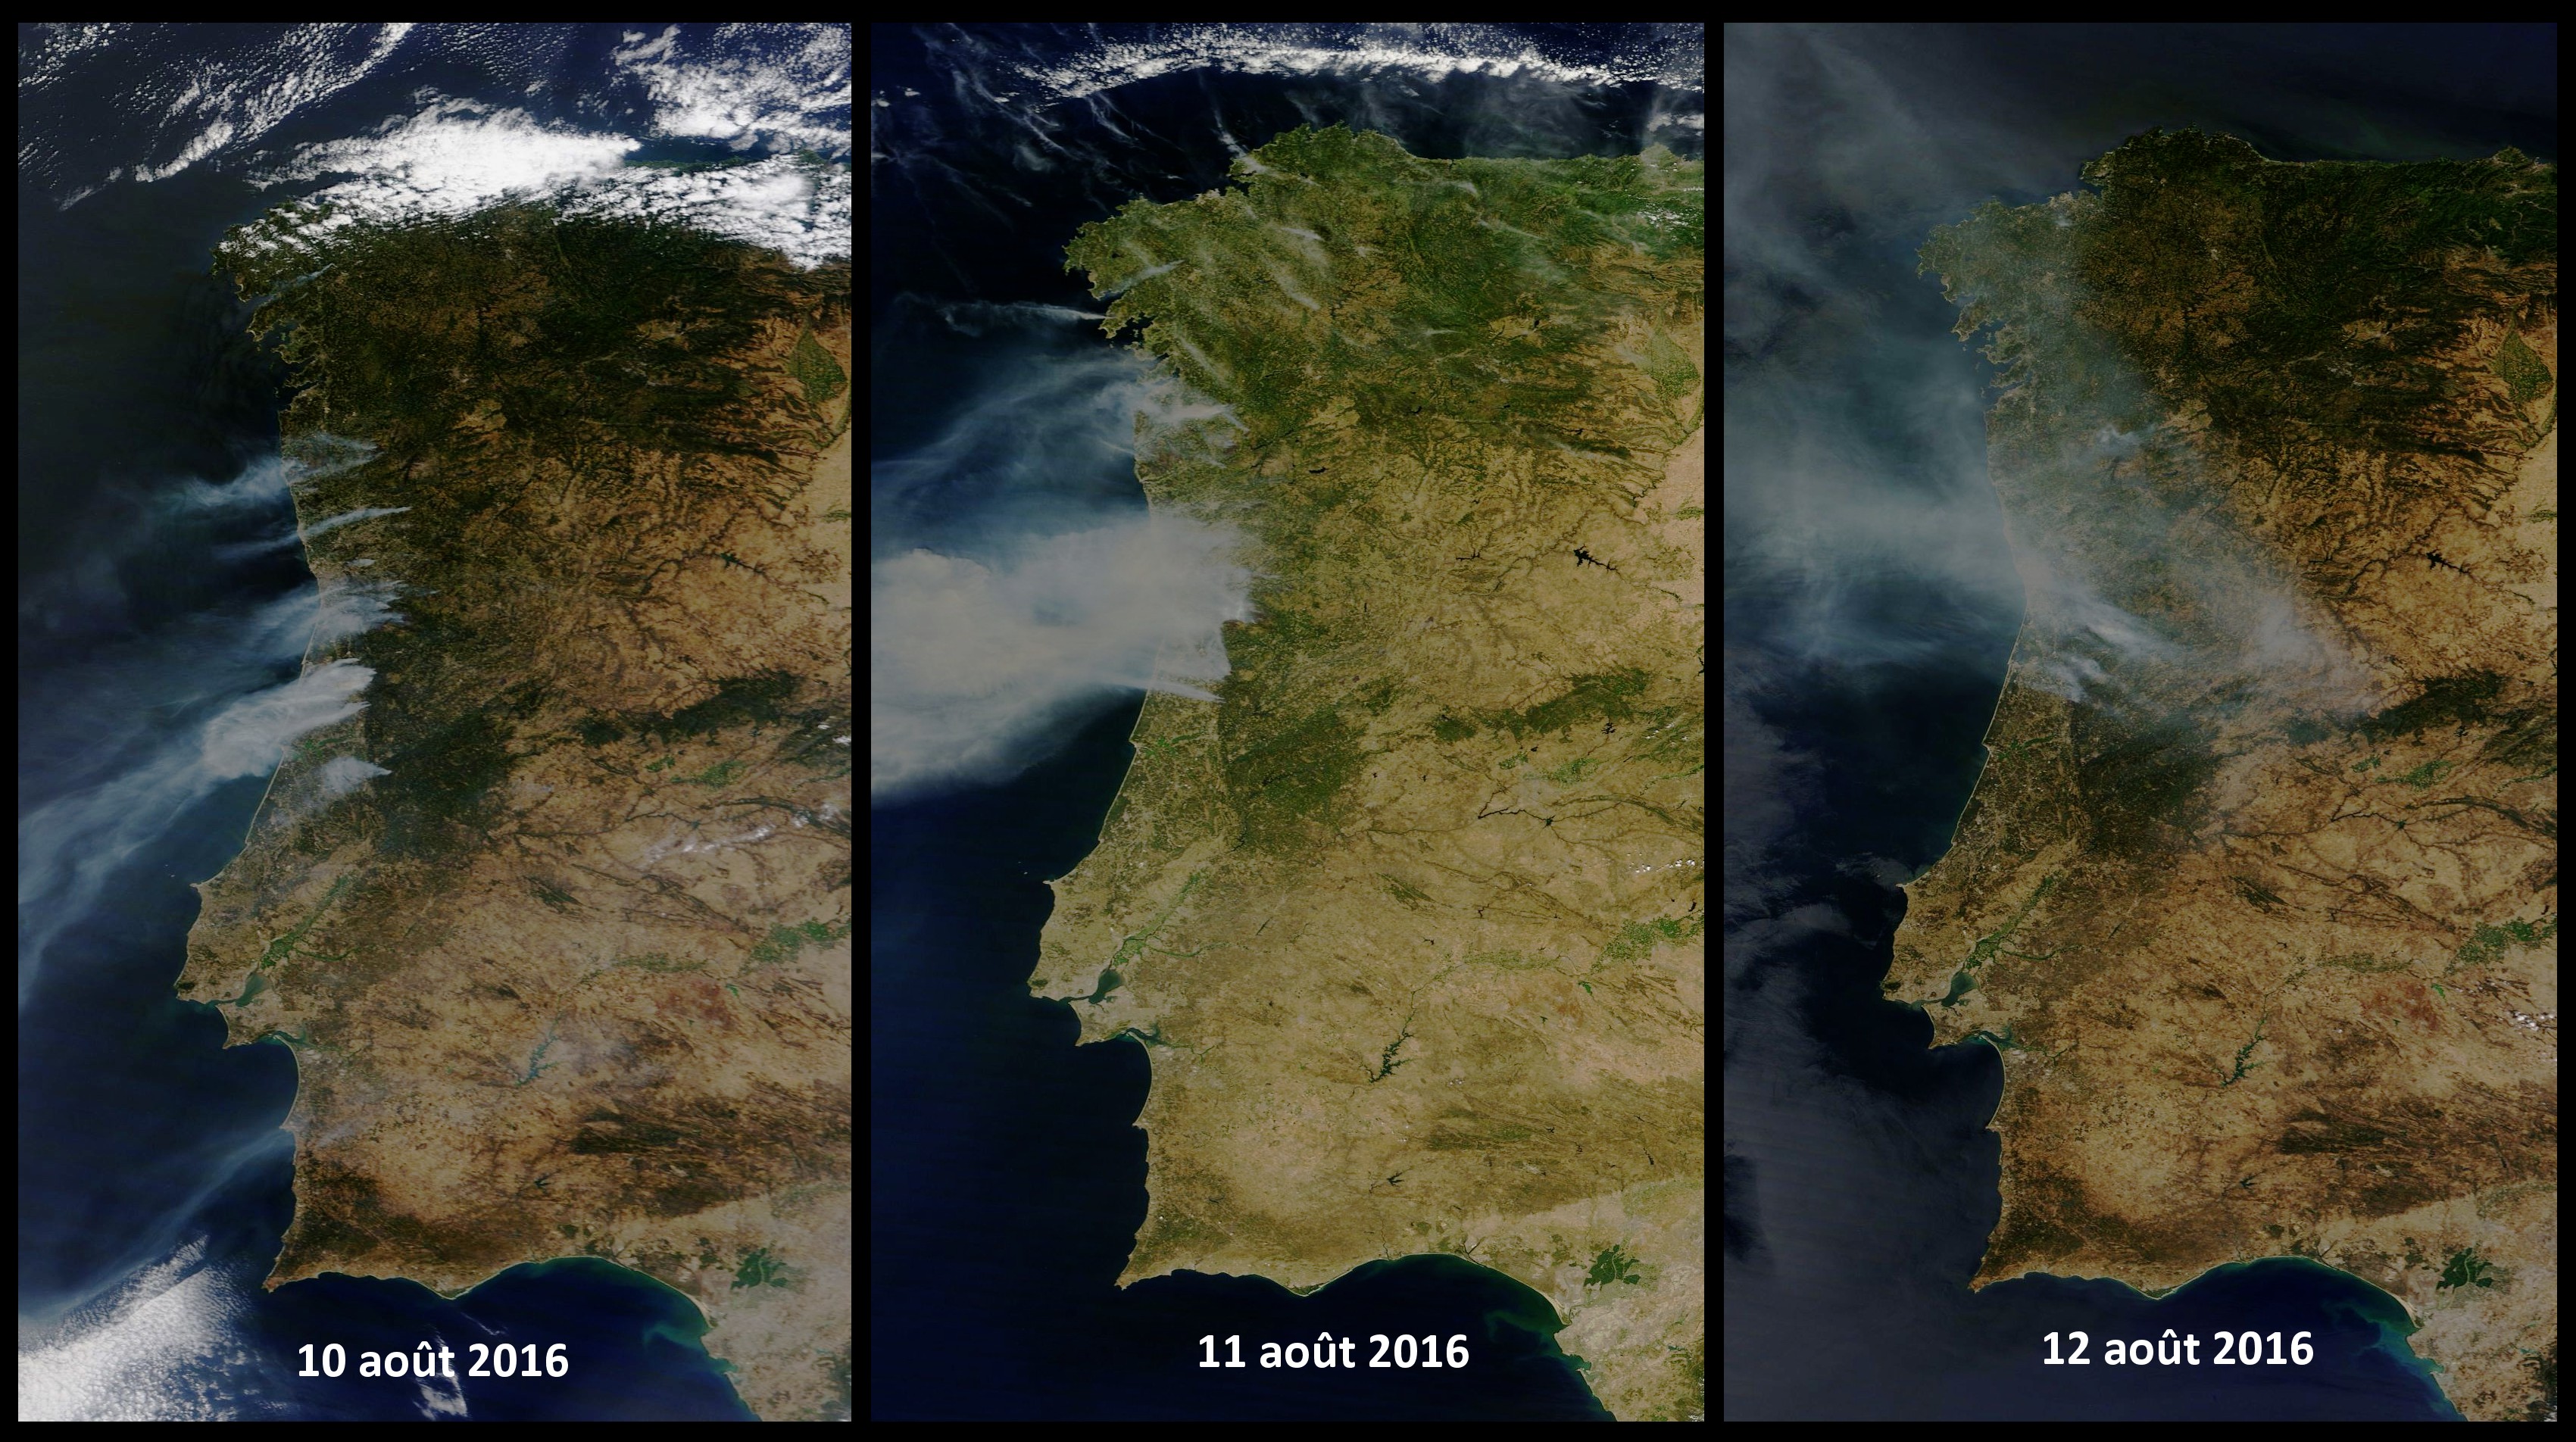 Incendies - Portugal - Août 2016 - EU Civil protection mechanism - Terra - MODIS - satellite d'observation - Fumée - Fire - Smoke - NASA - Worldview